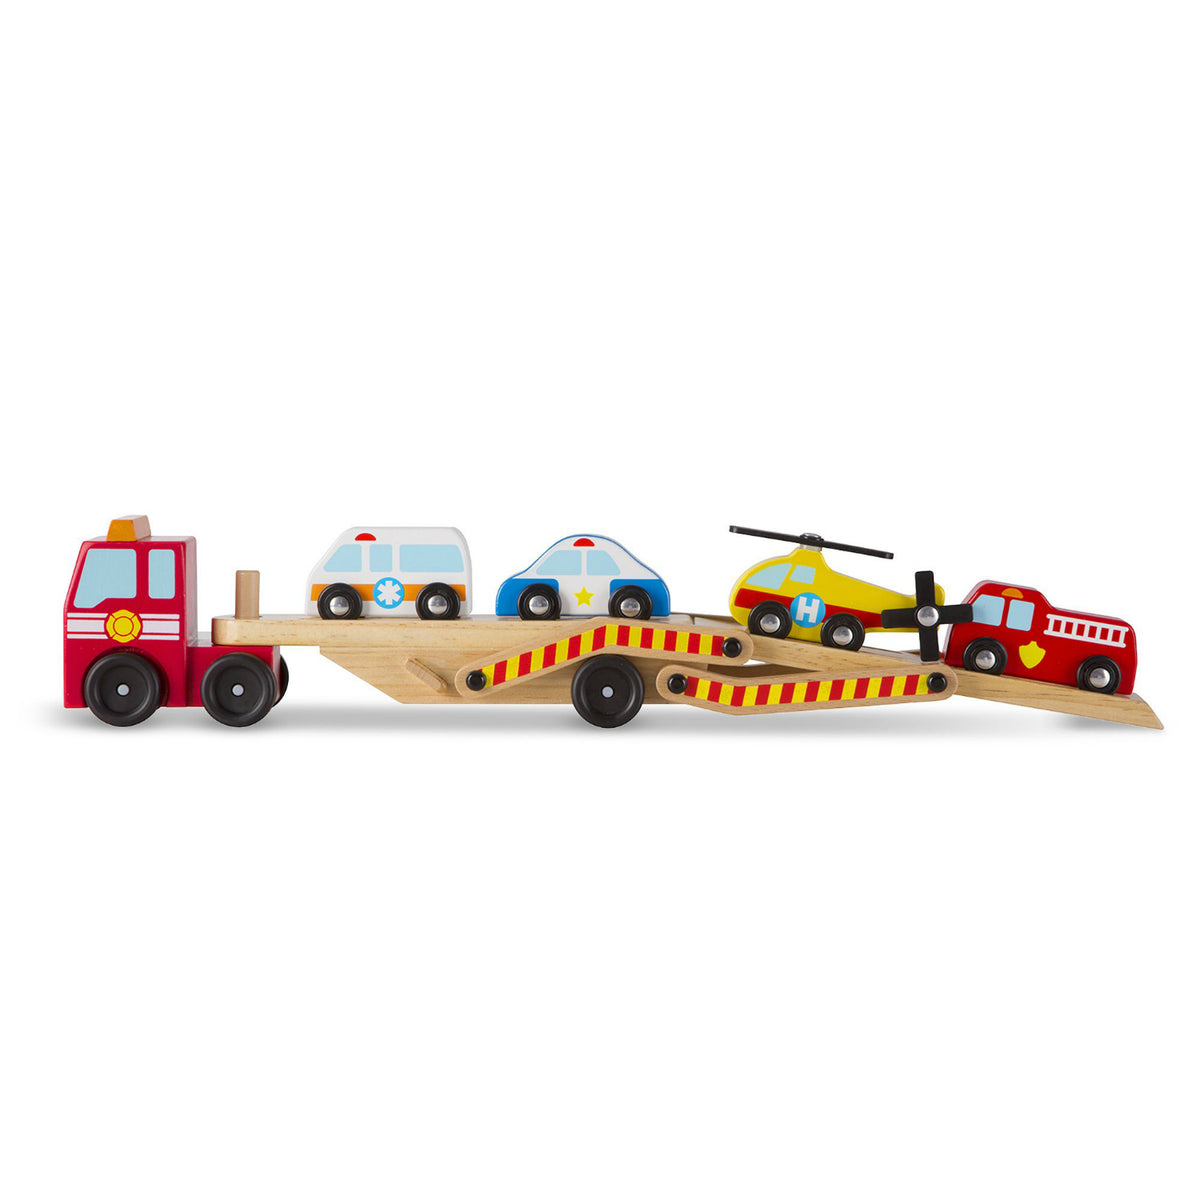 Melissa & Doug 4610 Emergency Vehicle Carrier Wooden Play Set, Age 3+